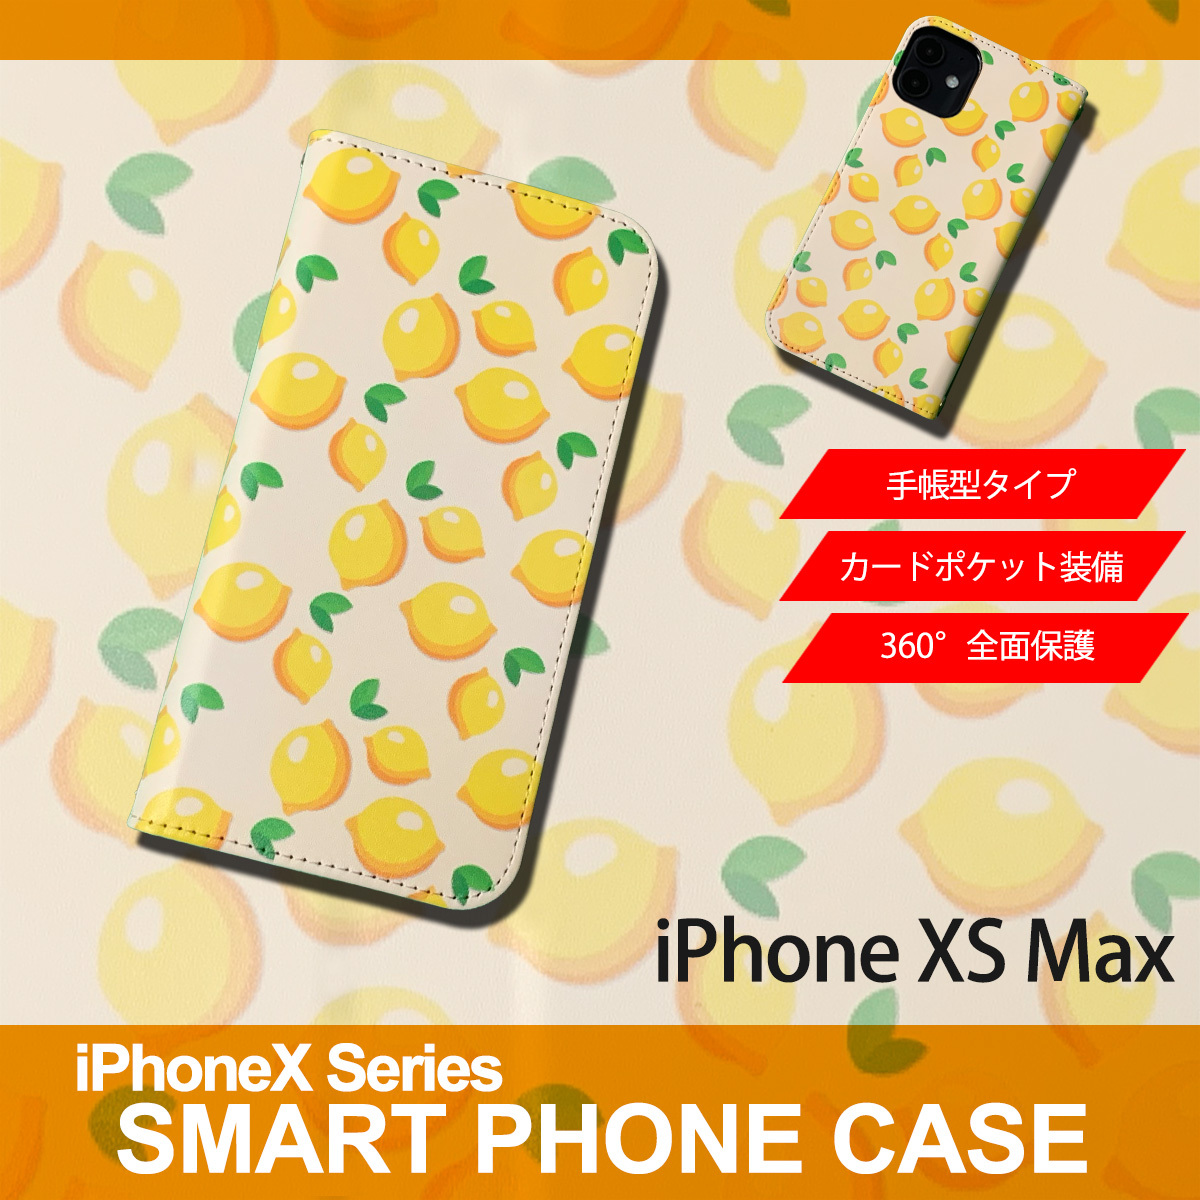 2 Iphonexs Max 手帳型 スマートフォン ケース スマホカバー Pvc レザー イラスト マグネット内蔵 早い者勝ち